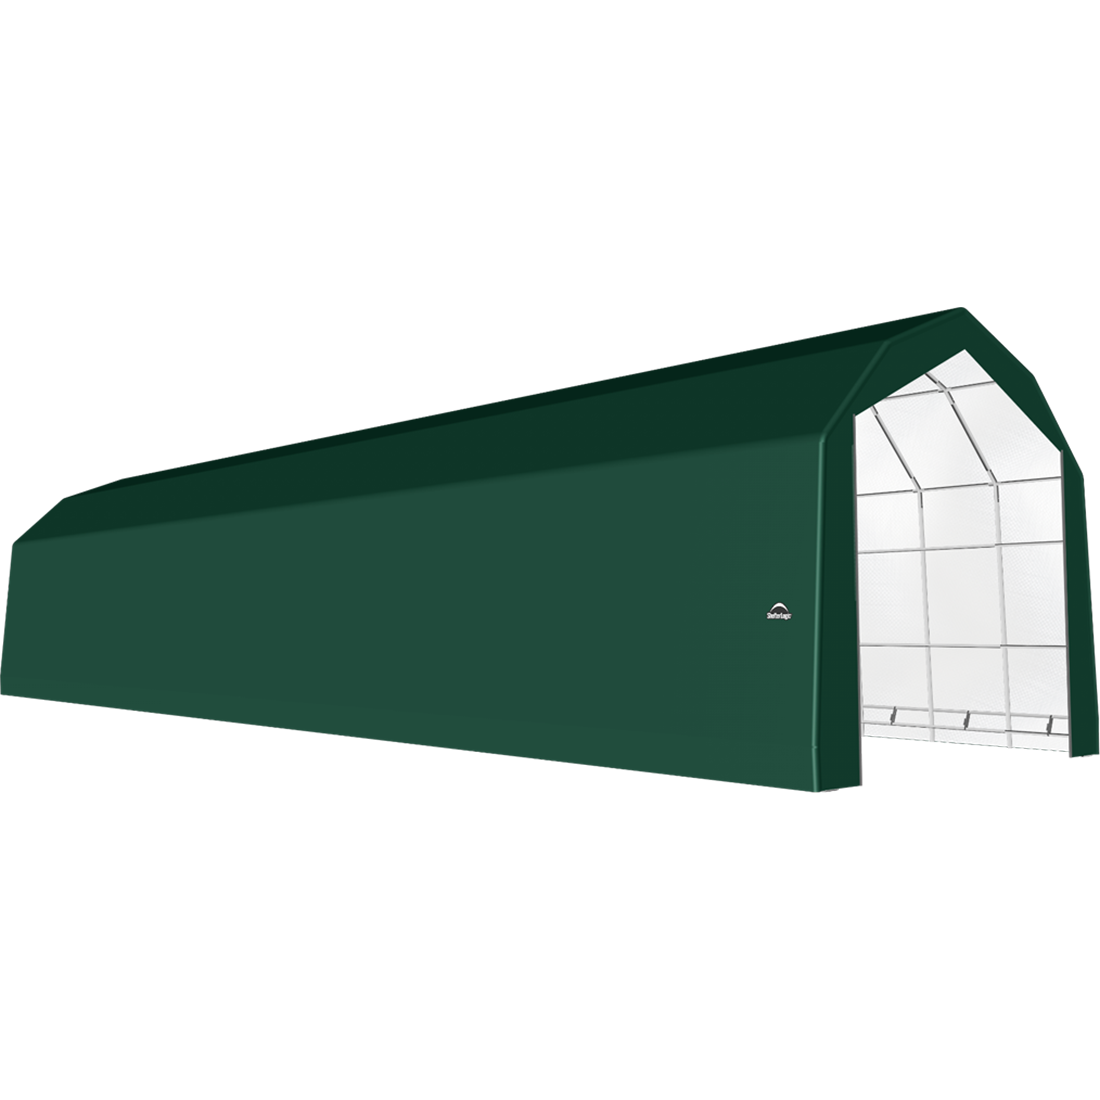 ShelterTech SP Series Barn Shelter, 20 ft. x 76 ft. x 18 ft. Heavy Duty PVC 14.5 oz. Green